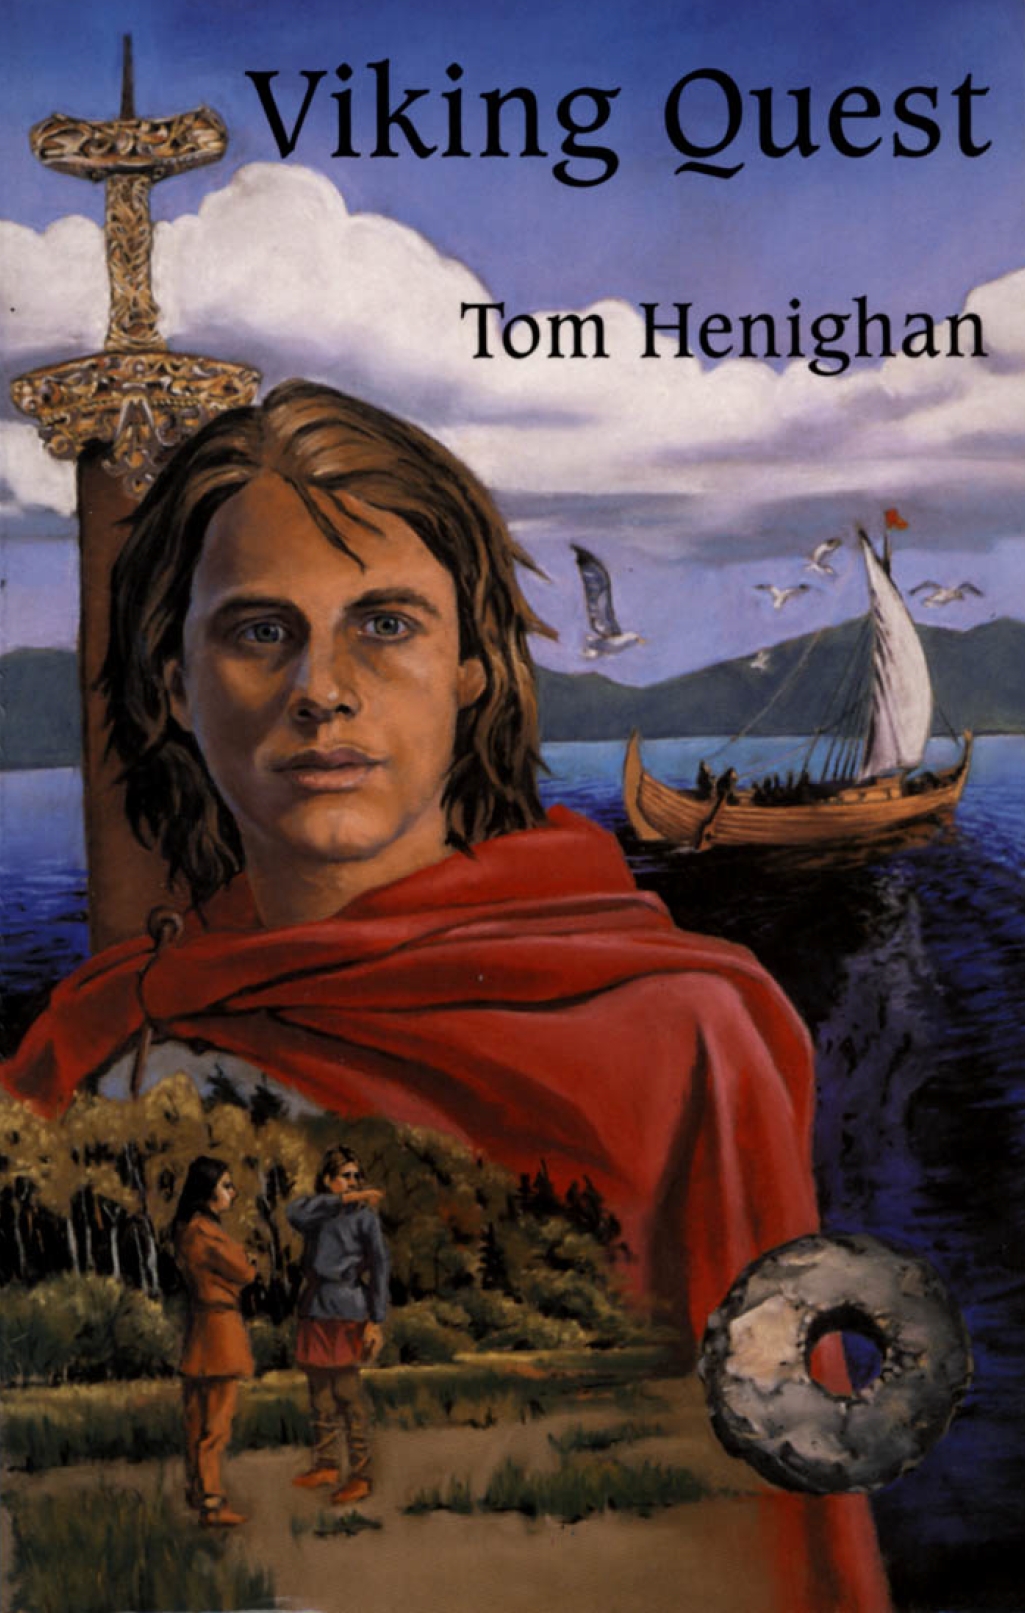 Читать романы про викингов шотландцев